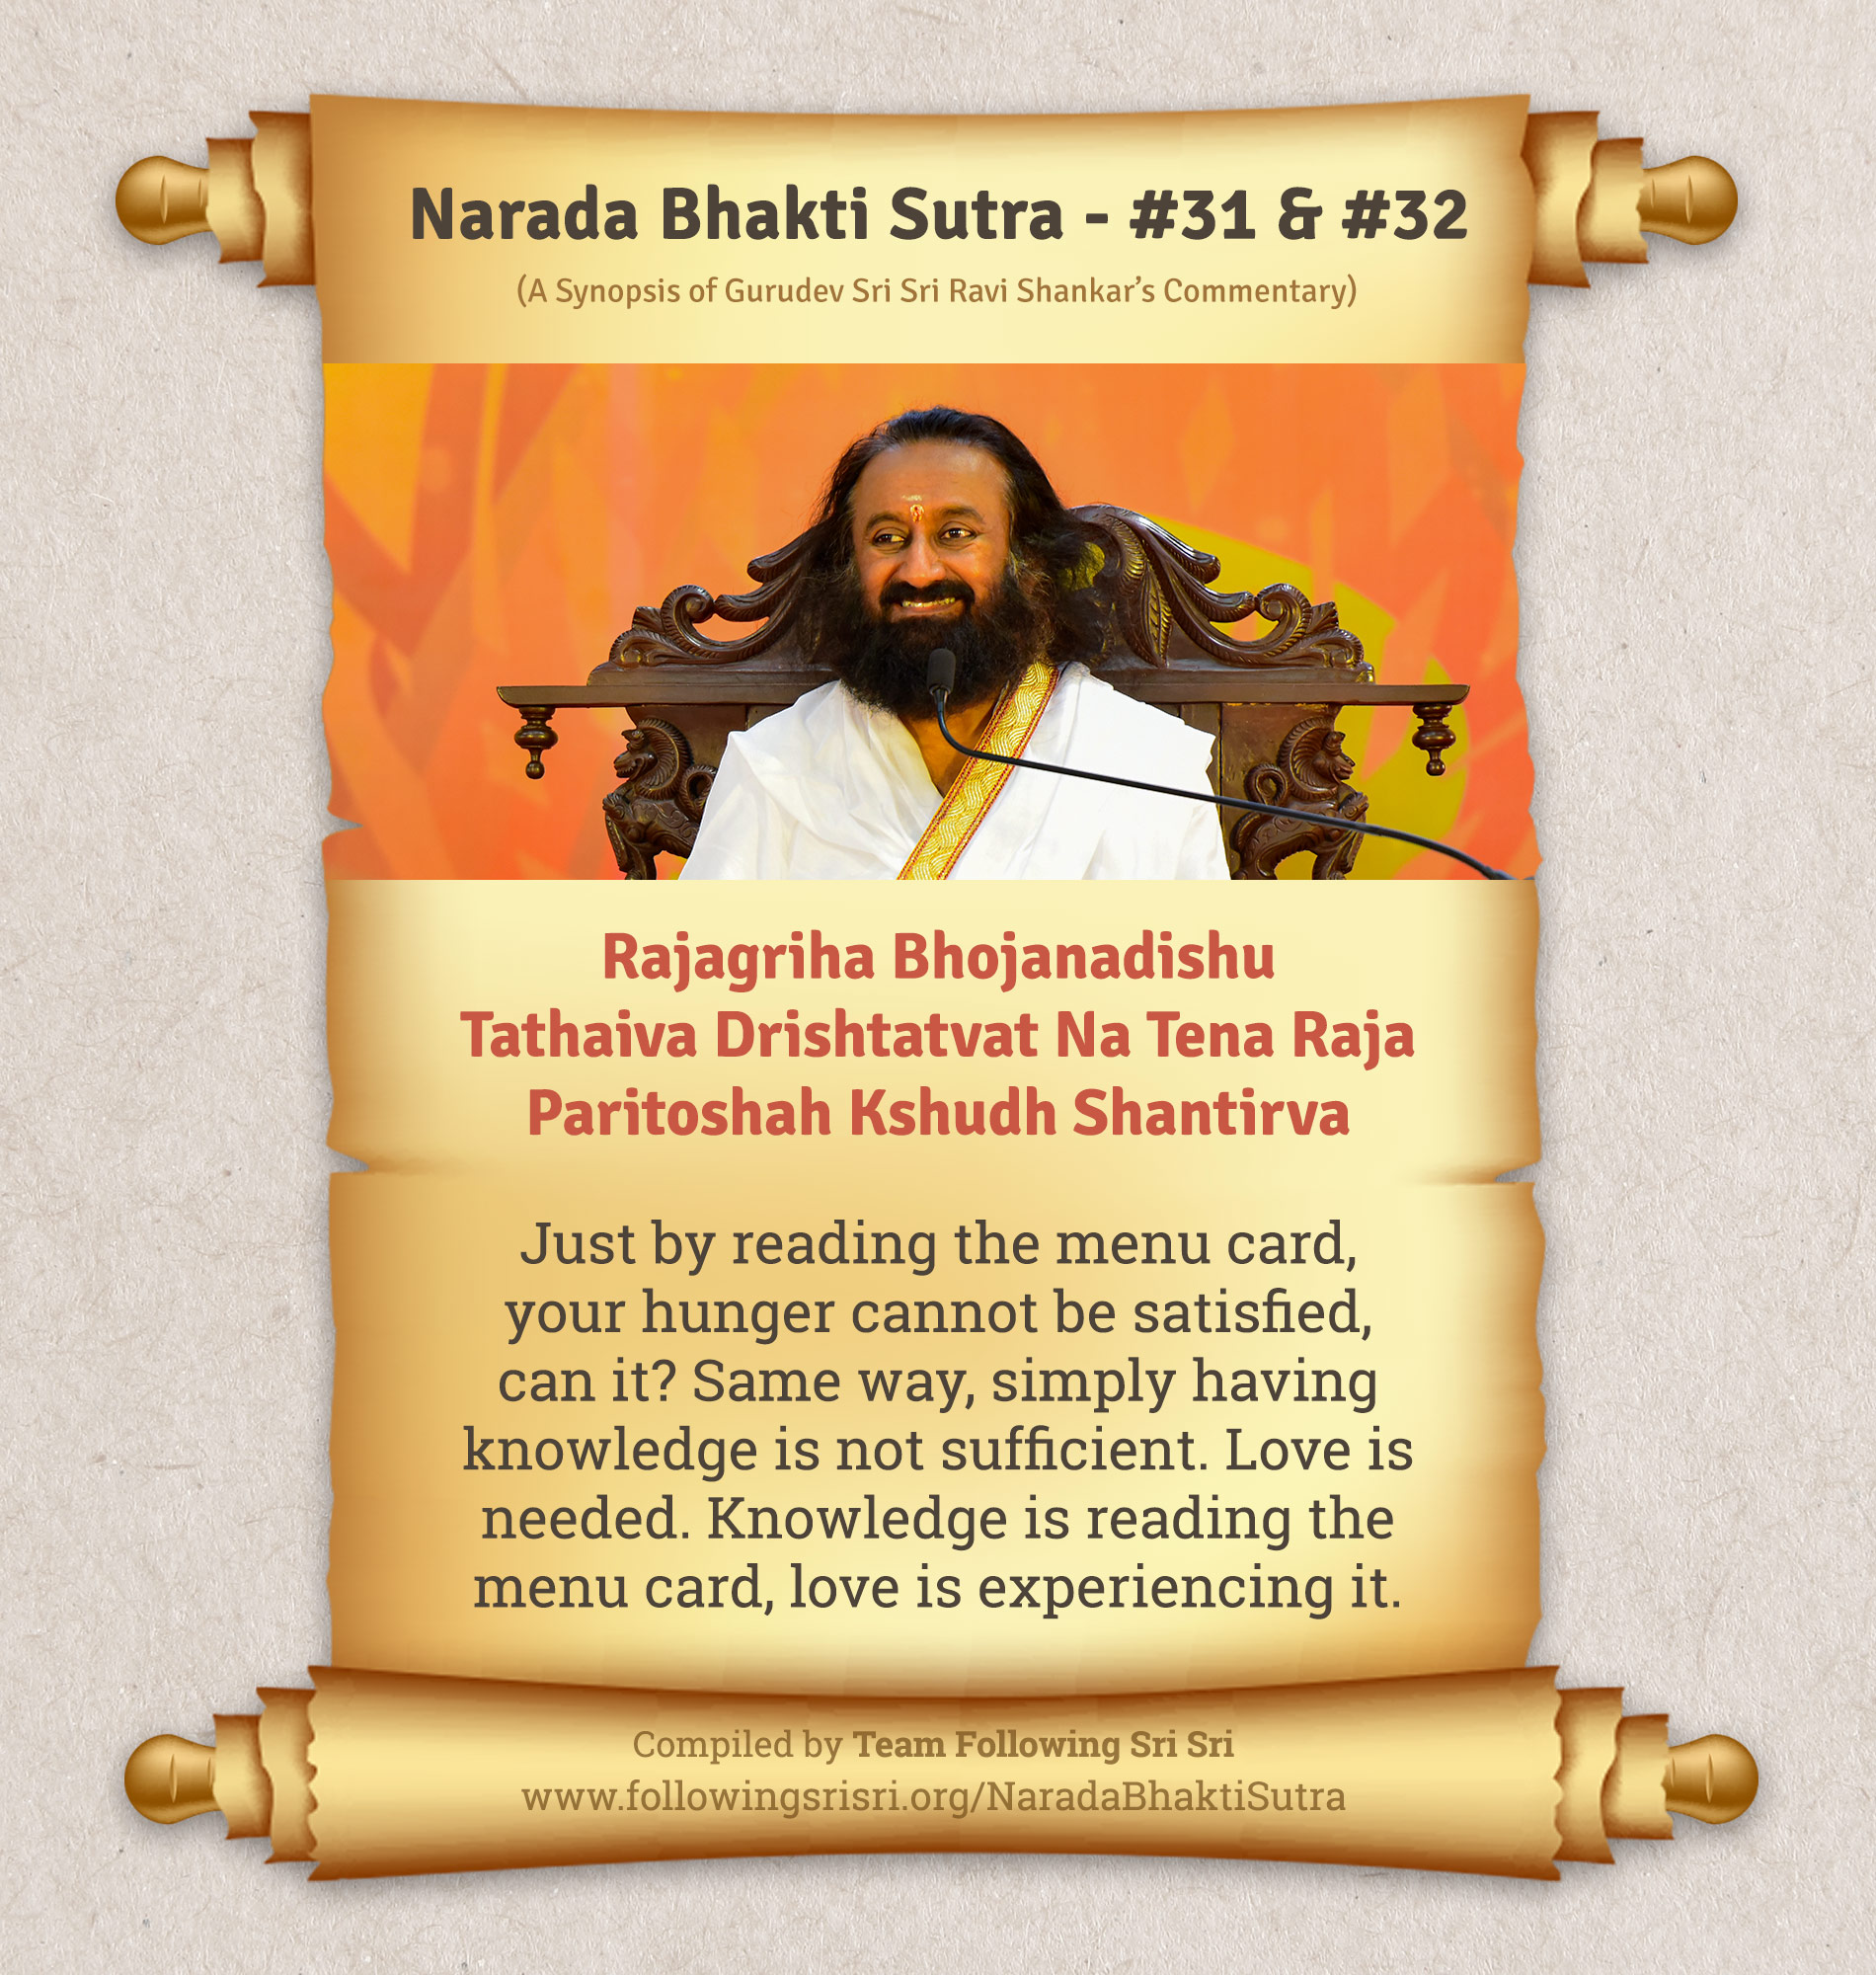 Narada Bhakti Sutras - Sutra 31 and 32